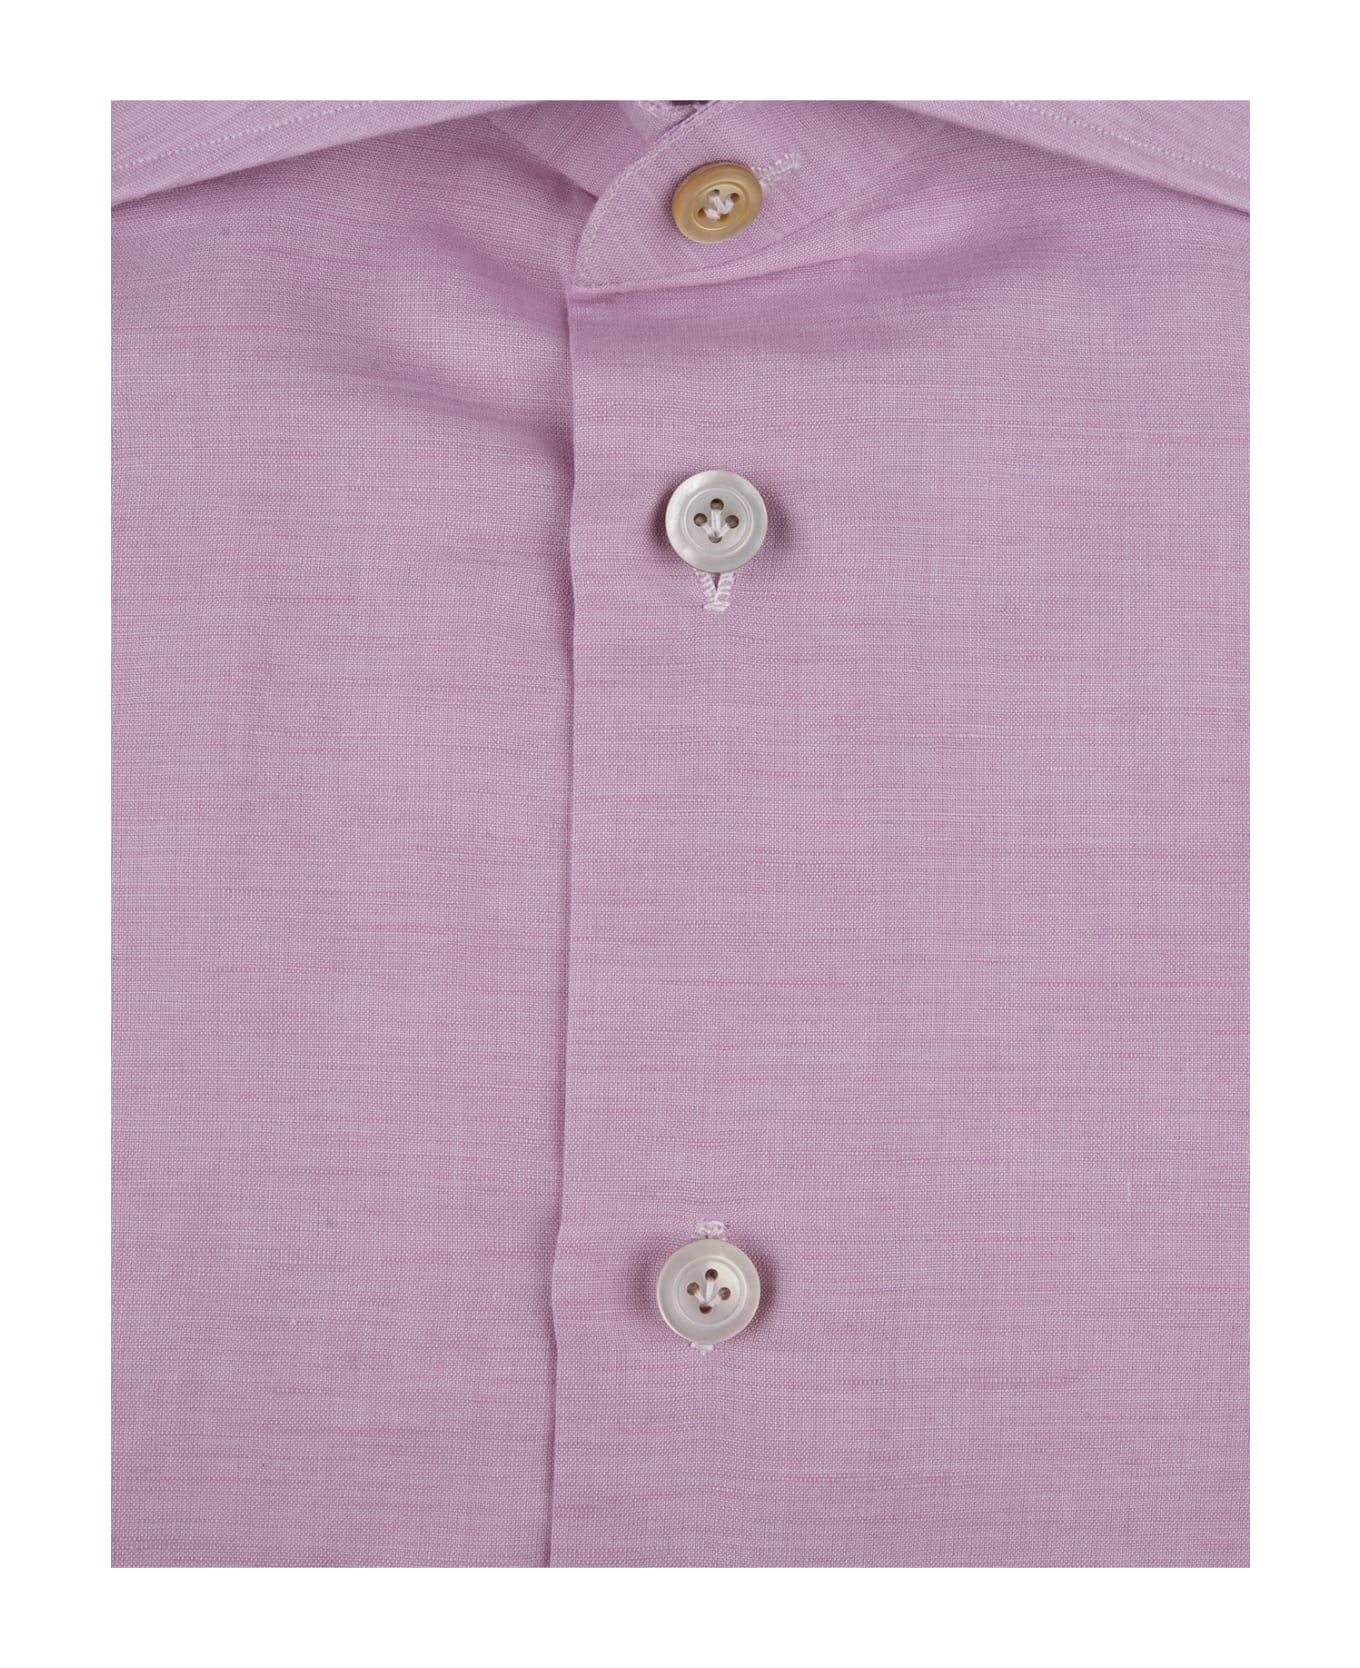 Kiton Pink Cotton And Linen Shirt - Pink